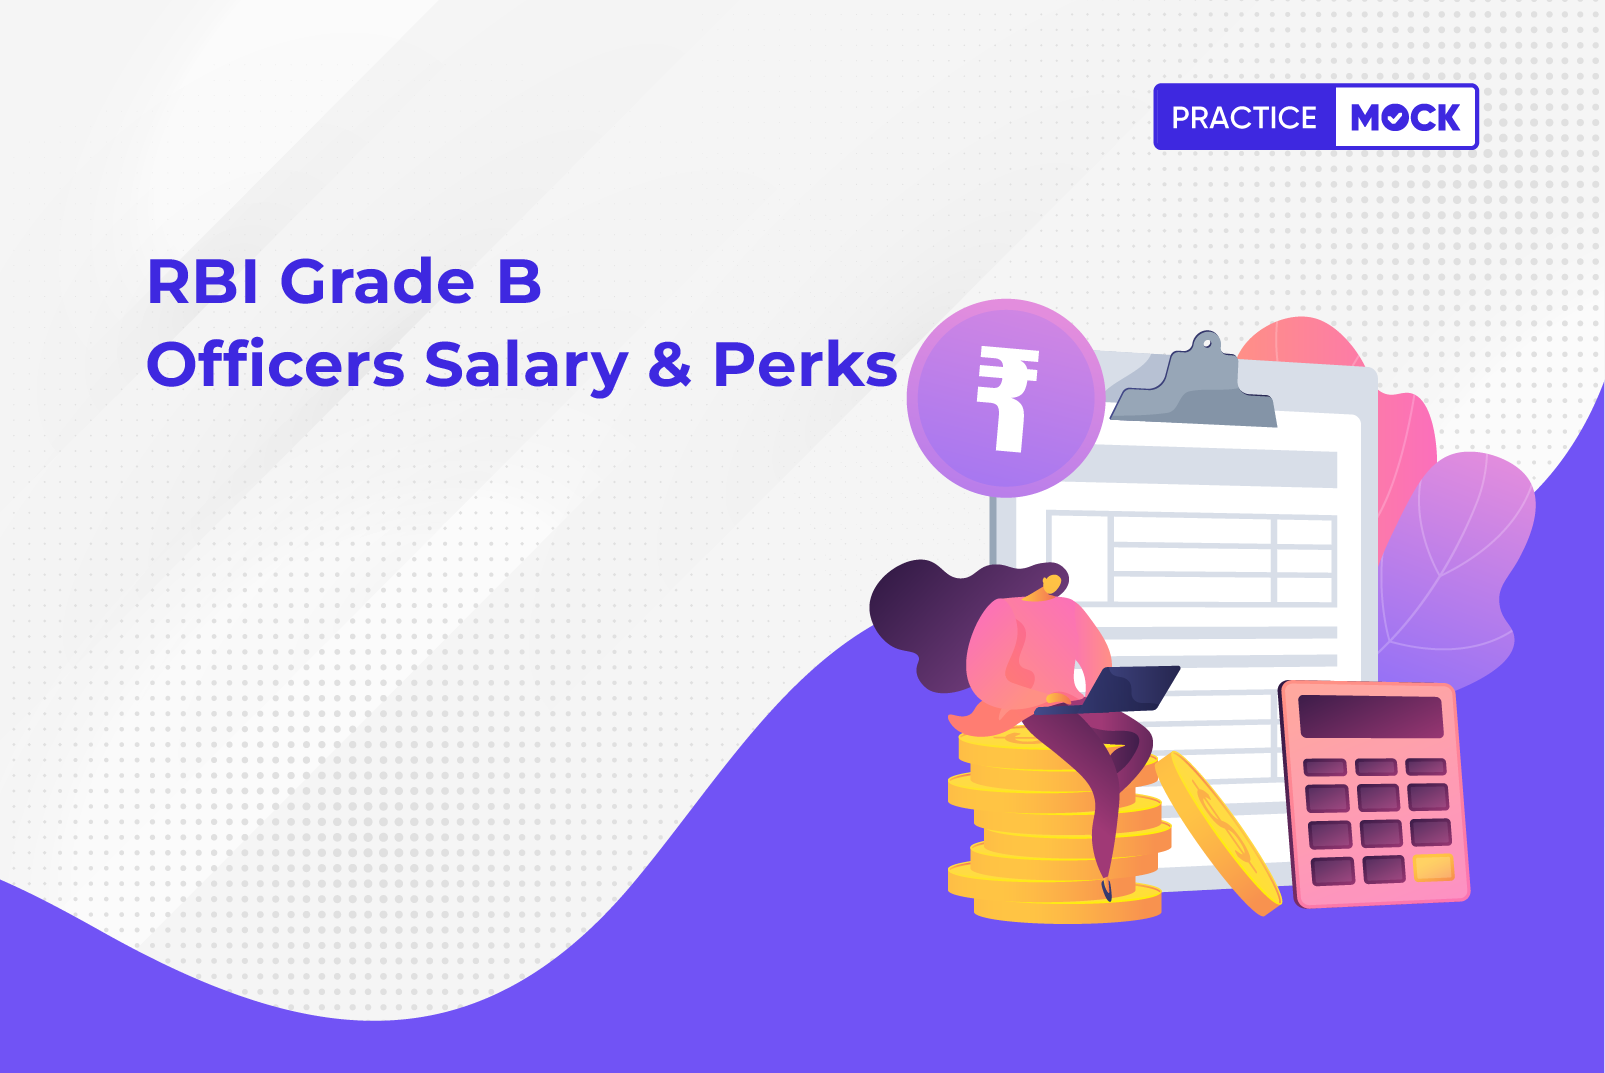 RBI Grade B Officers Salary & Perks